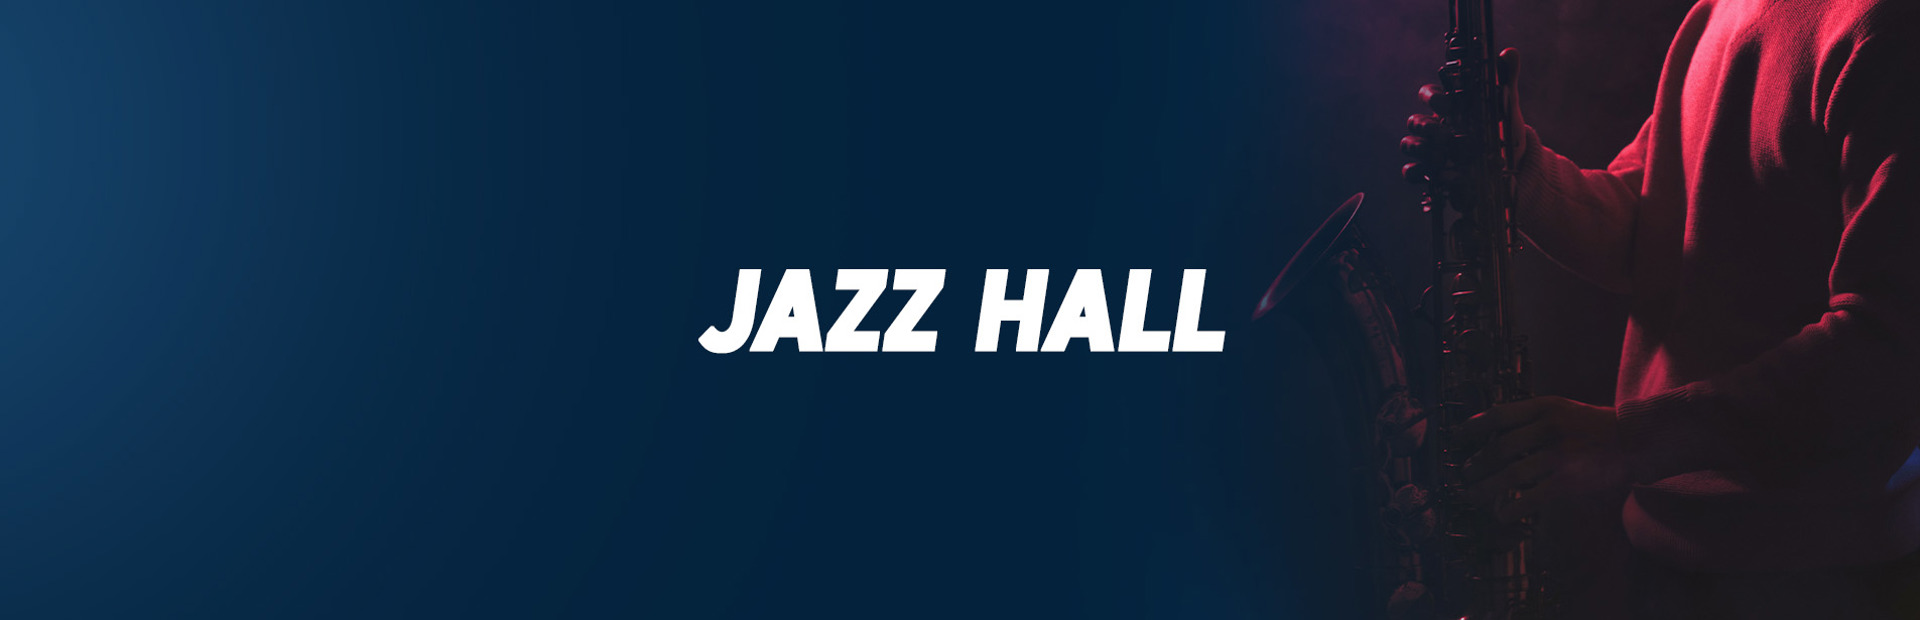 Jazz hall